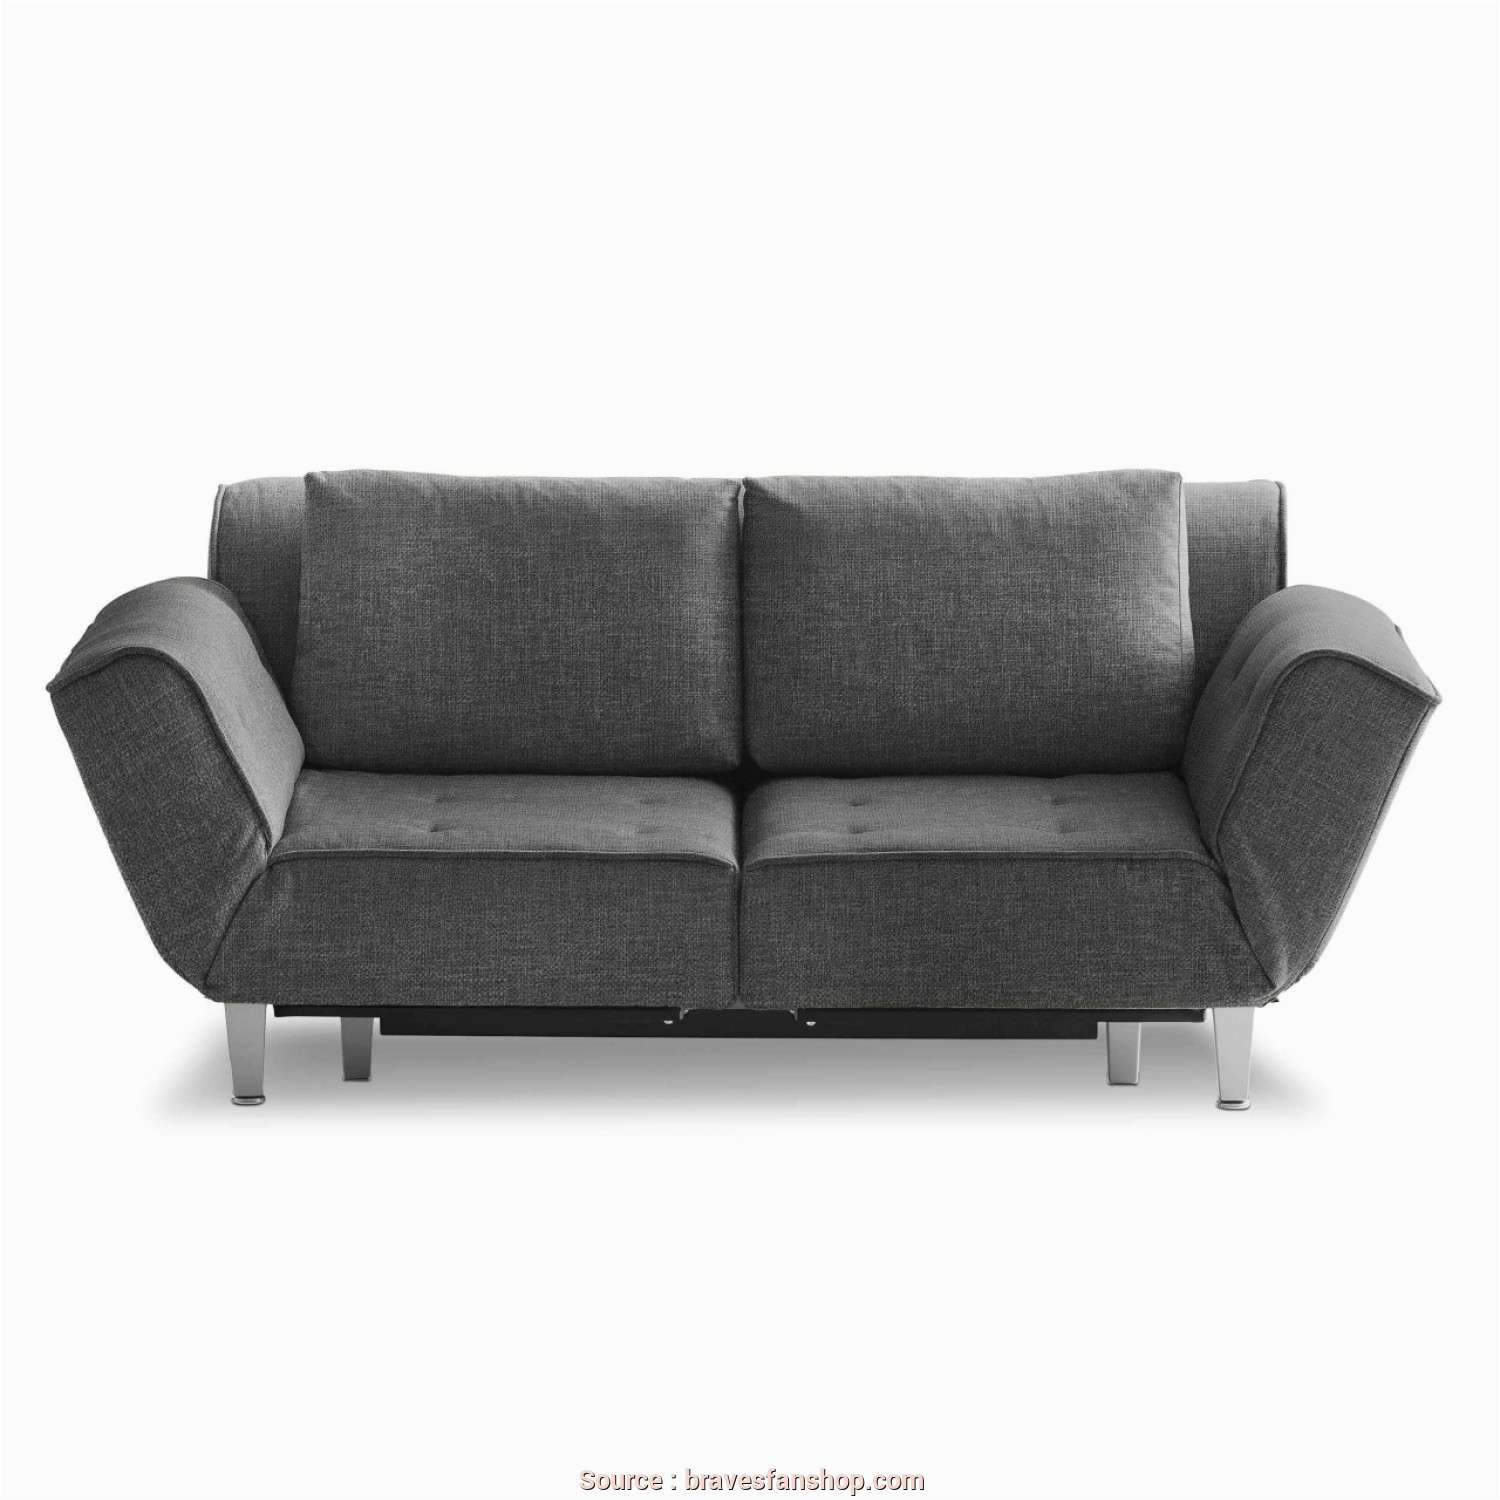 ikea stoffe grau full size sofa ikea beautiful ikea kautsch inspirierend sofa grau stoff graue couch 0d archives 52